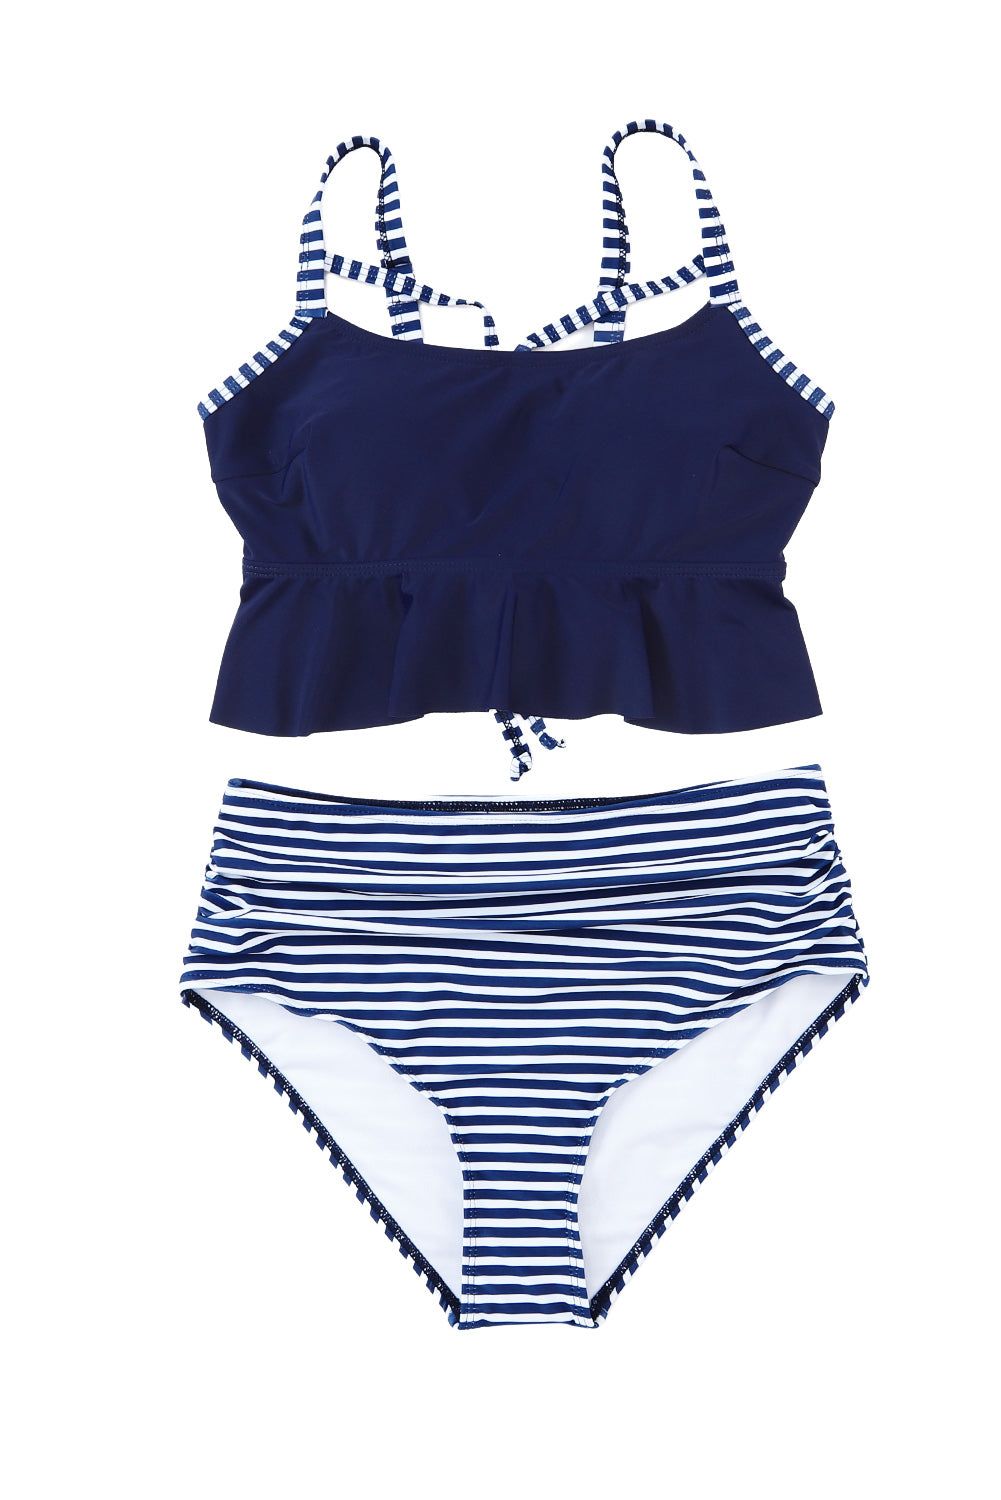 Blue Cutout Ruffle Crop Top and Striped High Waist Bikini Set